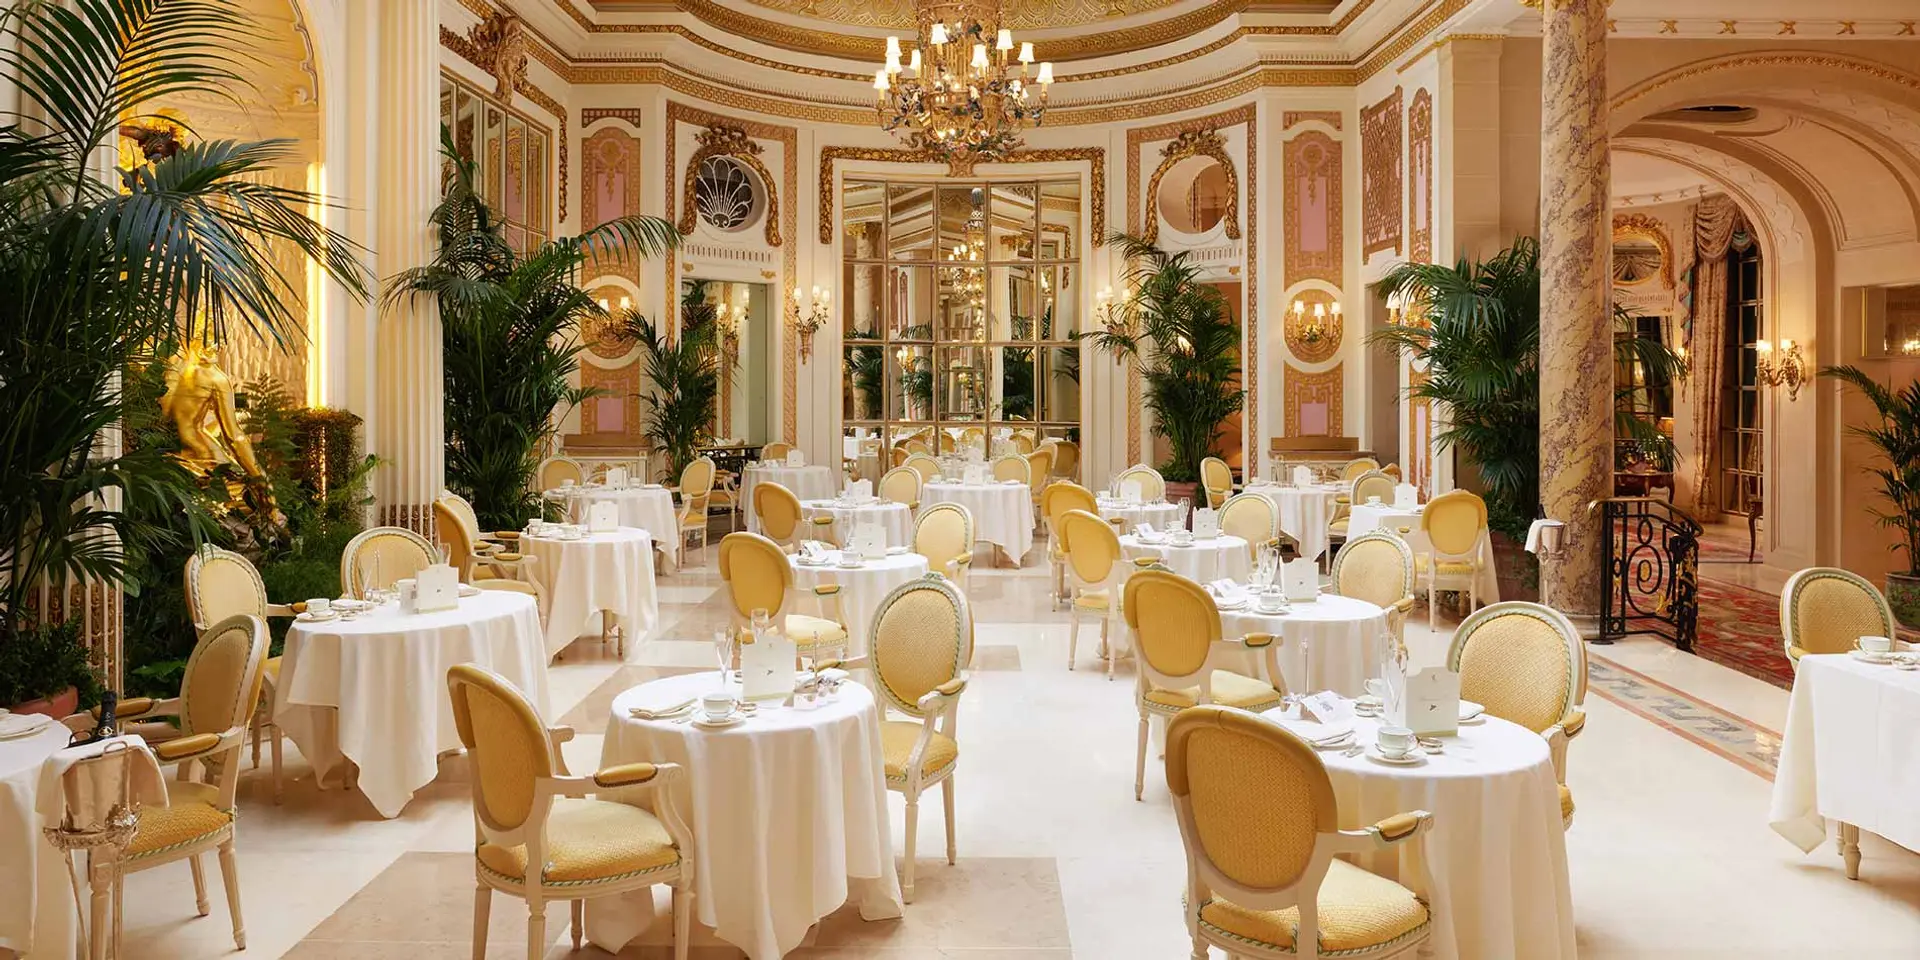 Hotel review Restaurants & Bars' - The Ritz London - 2